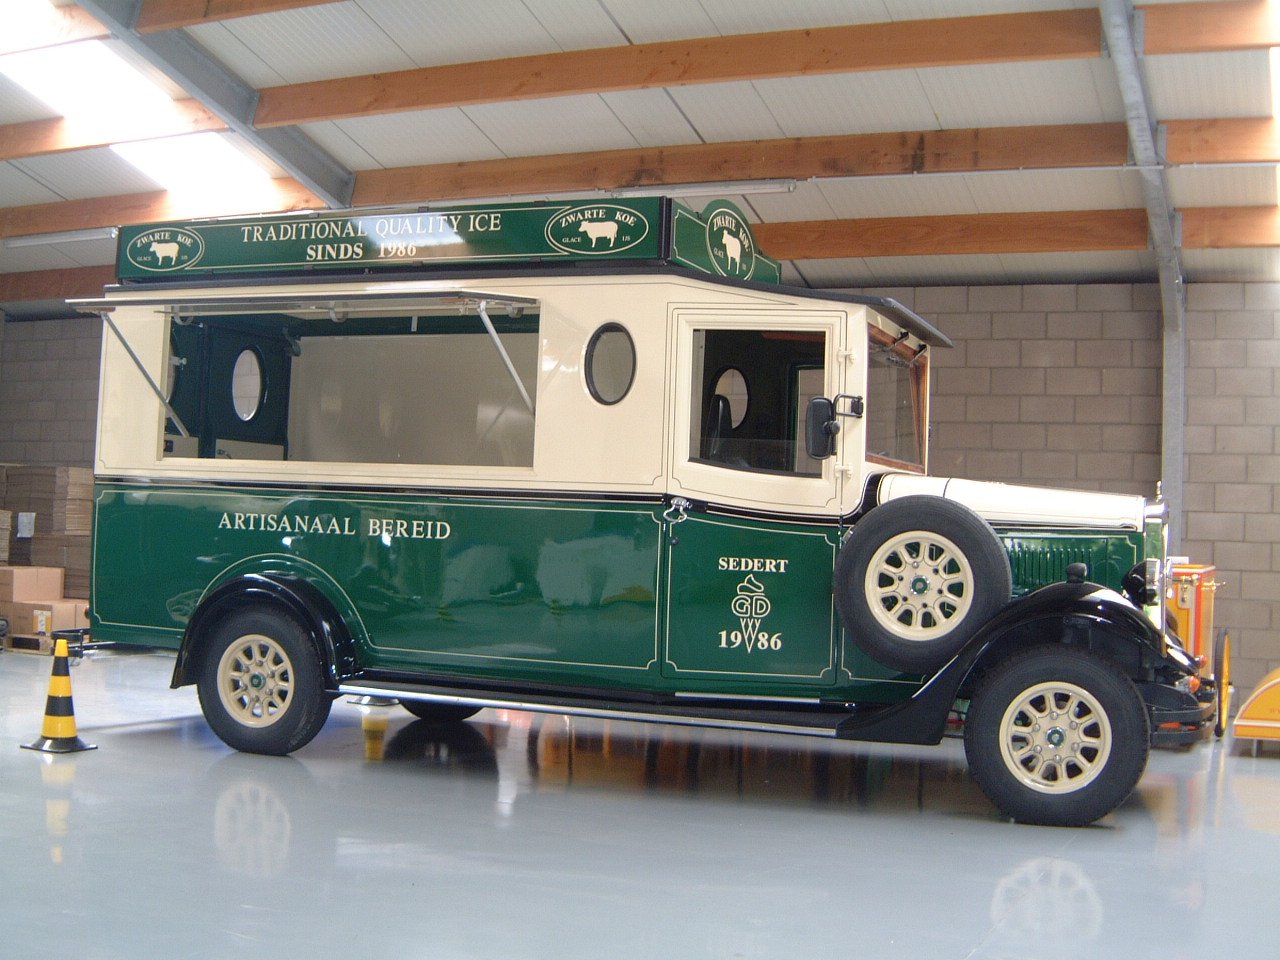 Vintage Asquith Shire - Zwarte Koe Ice Cream Van (belgium)